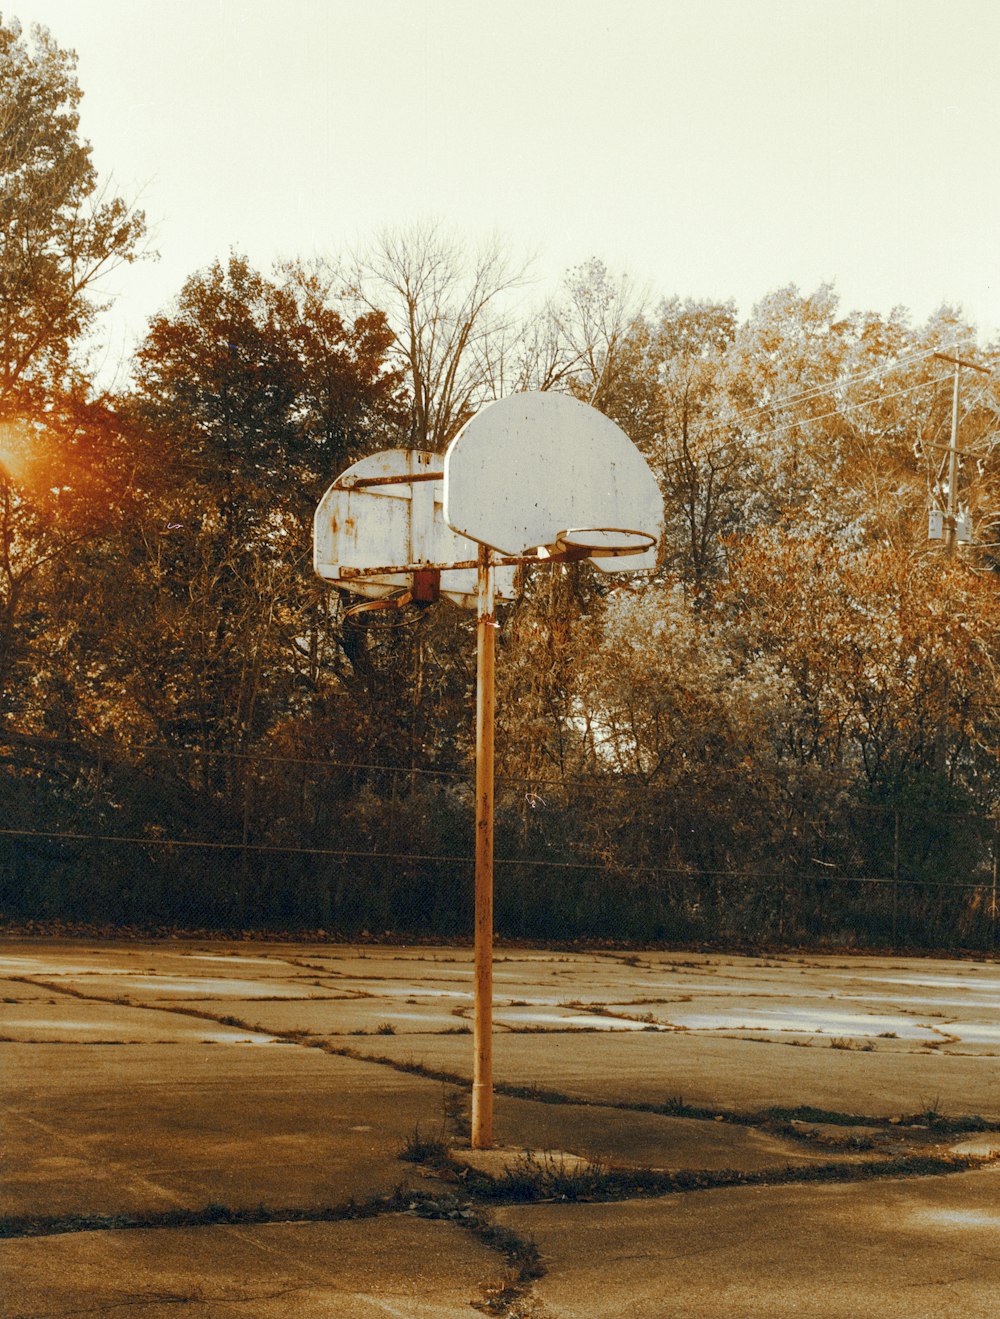 aro de basquete branco perto de árvores durante o dia